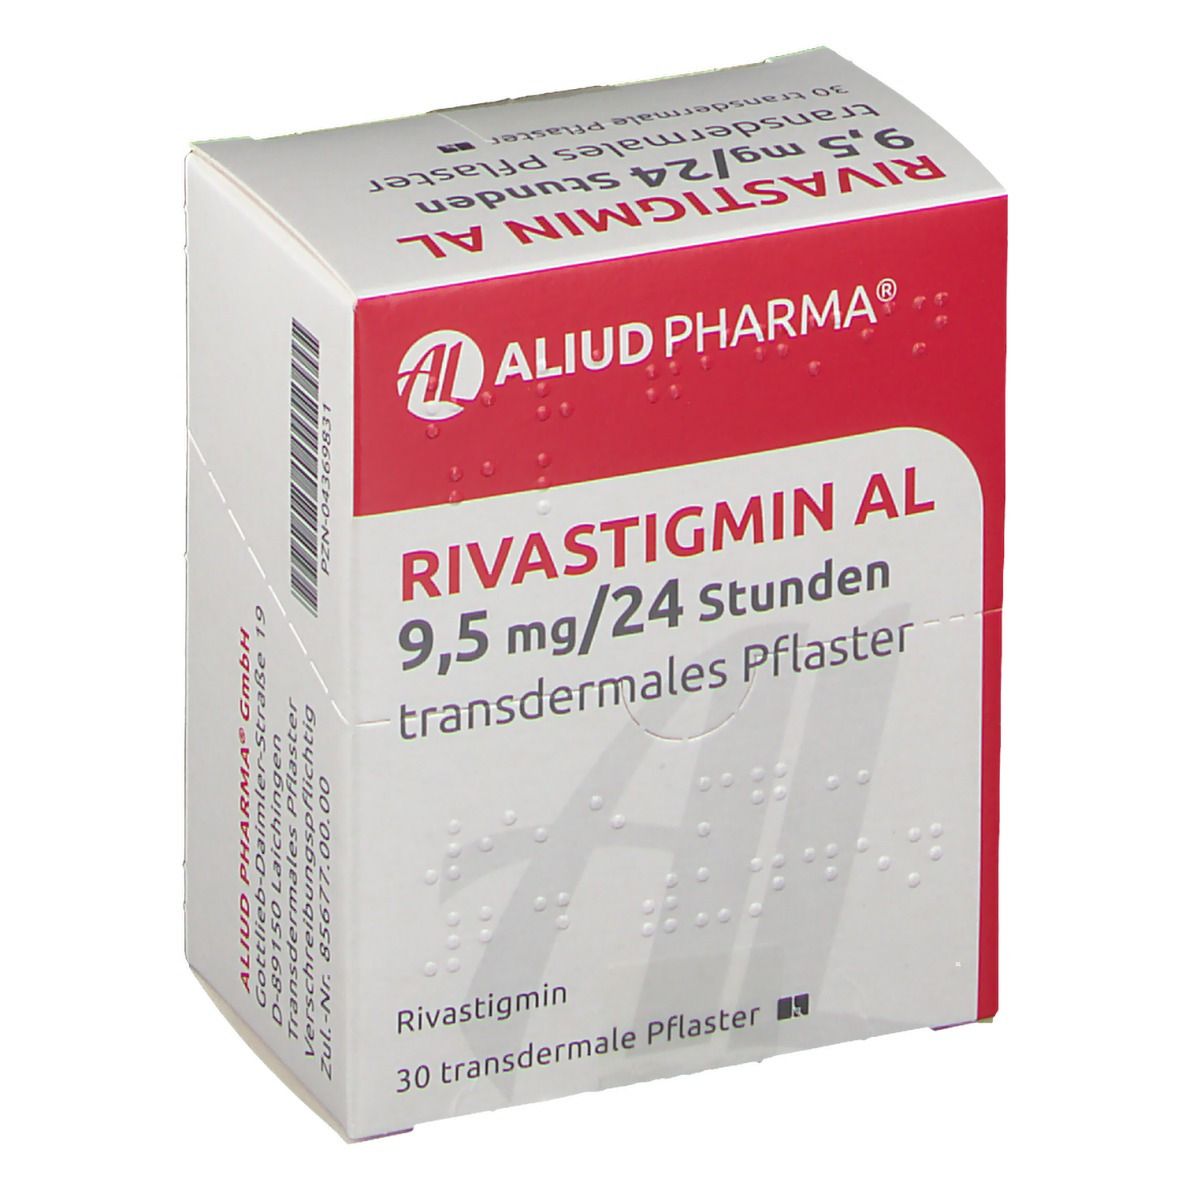 Rivastigmin AL 9,5 mg/24 Stunden